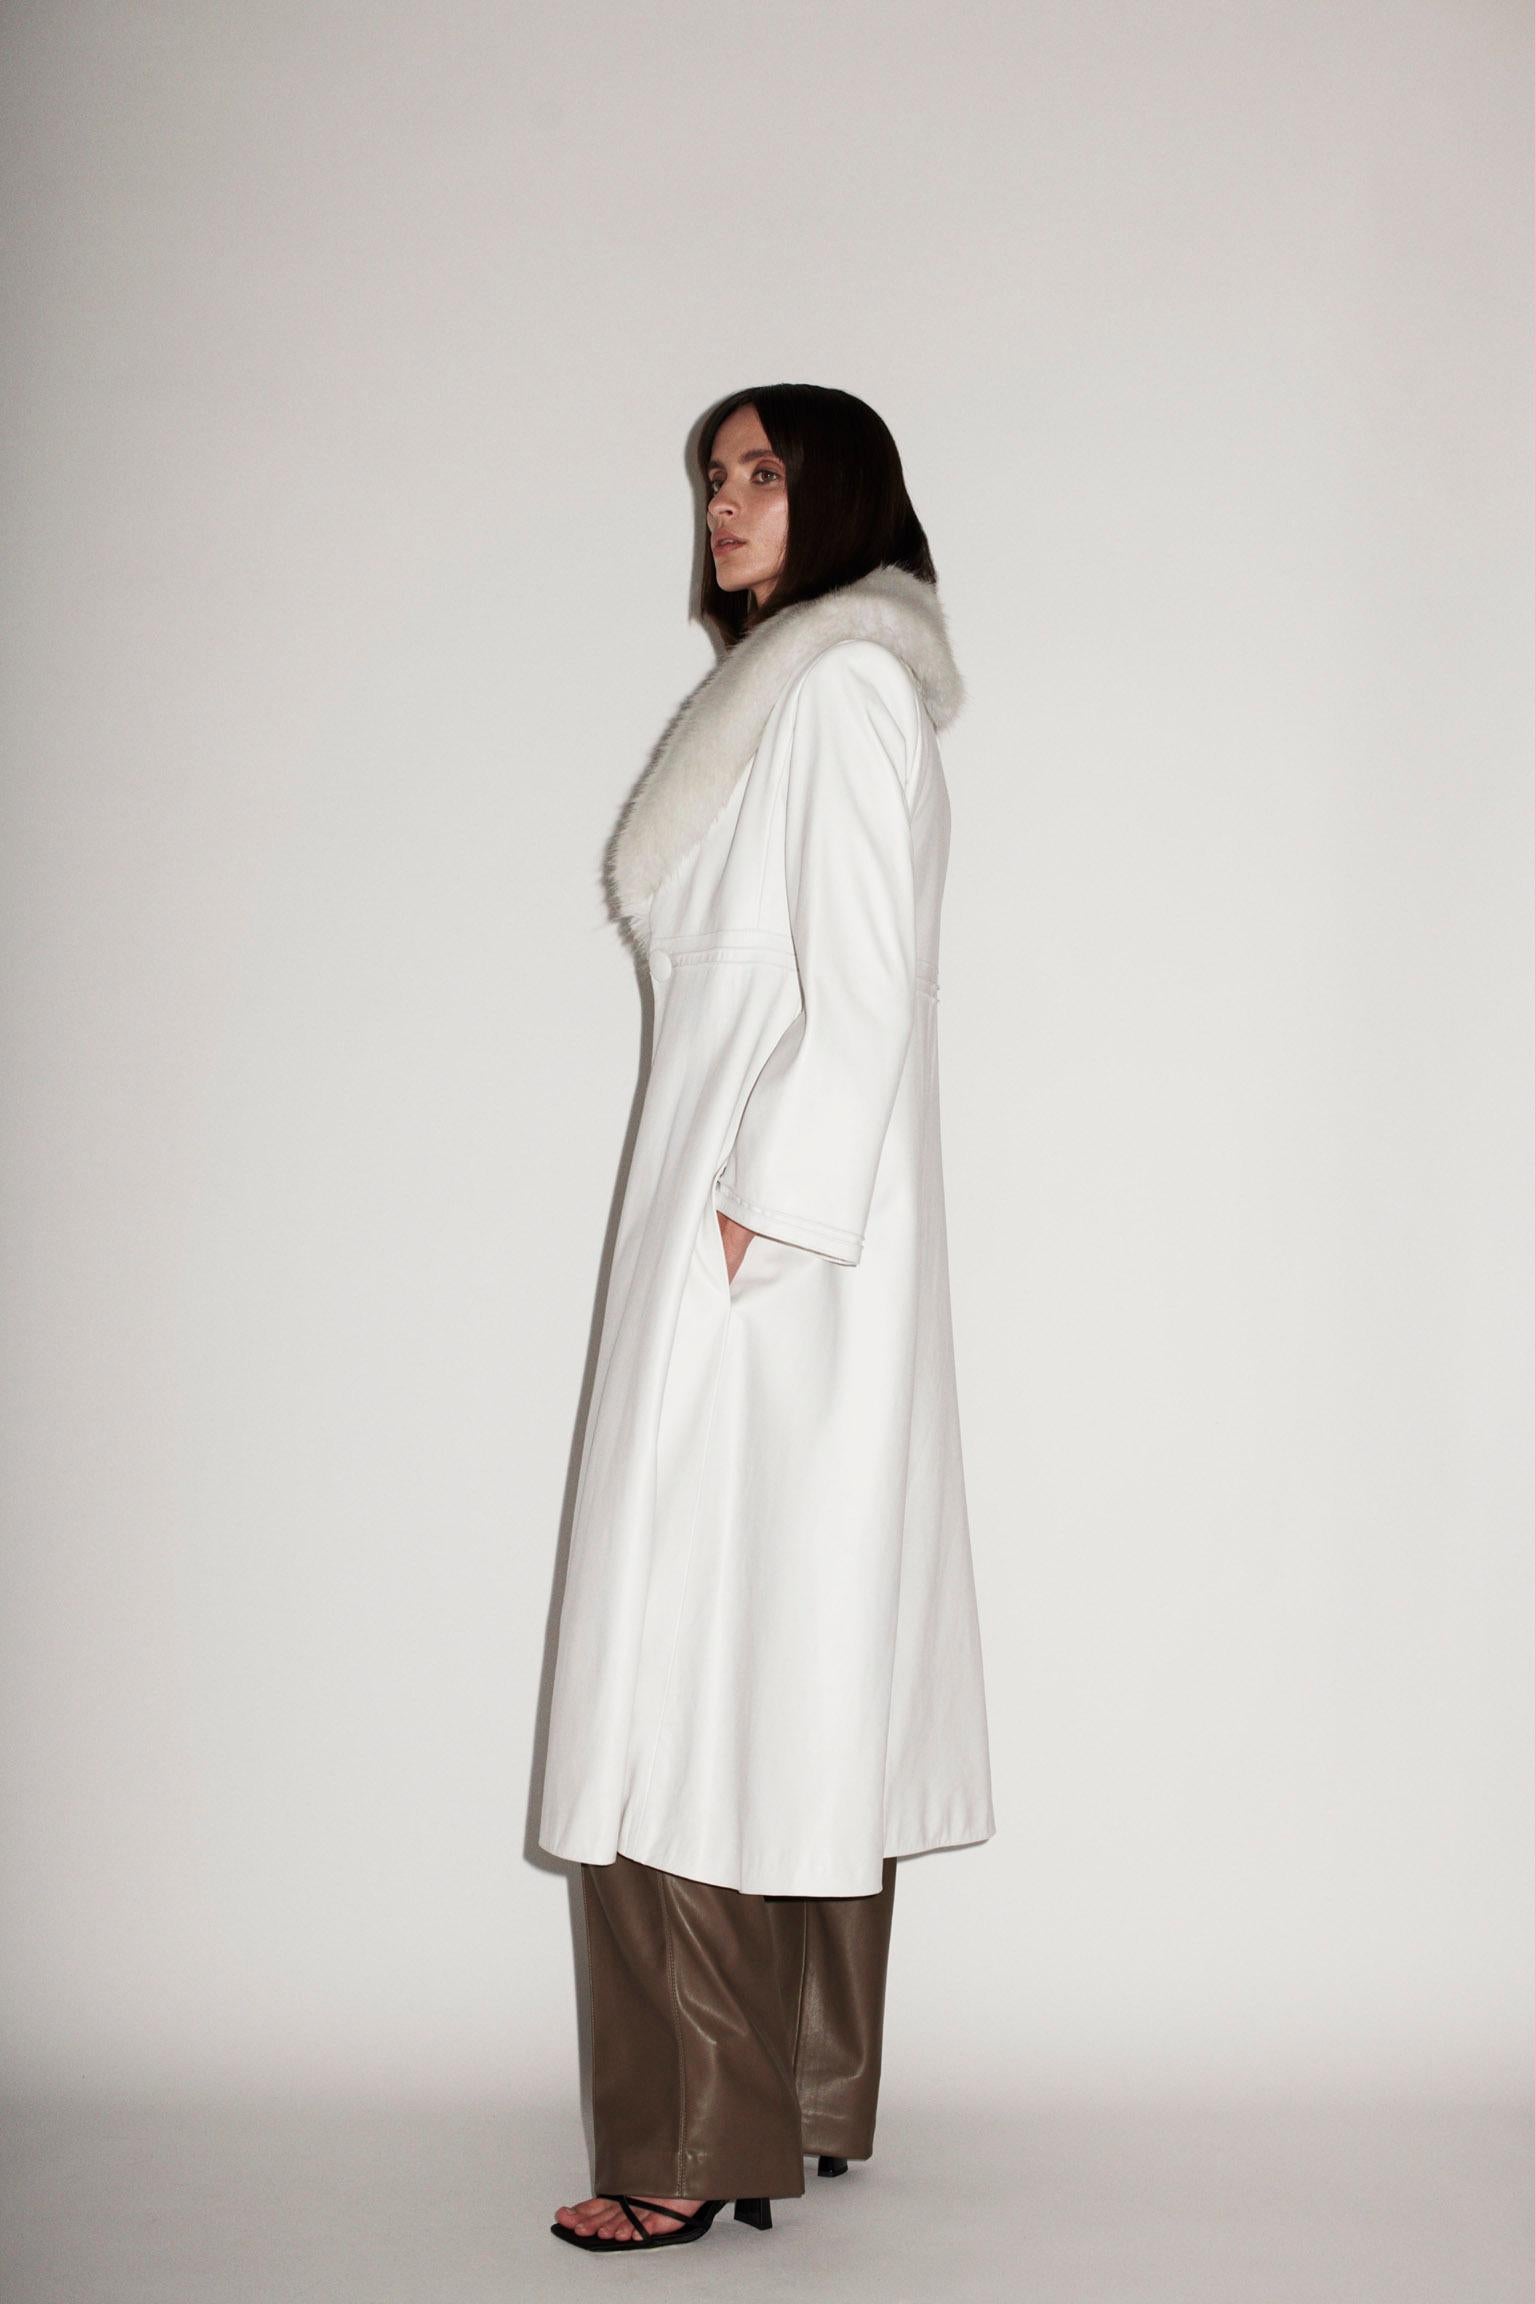 Gray Verheyen London Edward Leather Coat in White with Faux Fur - Size uk 14  For Sale